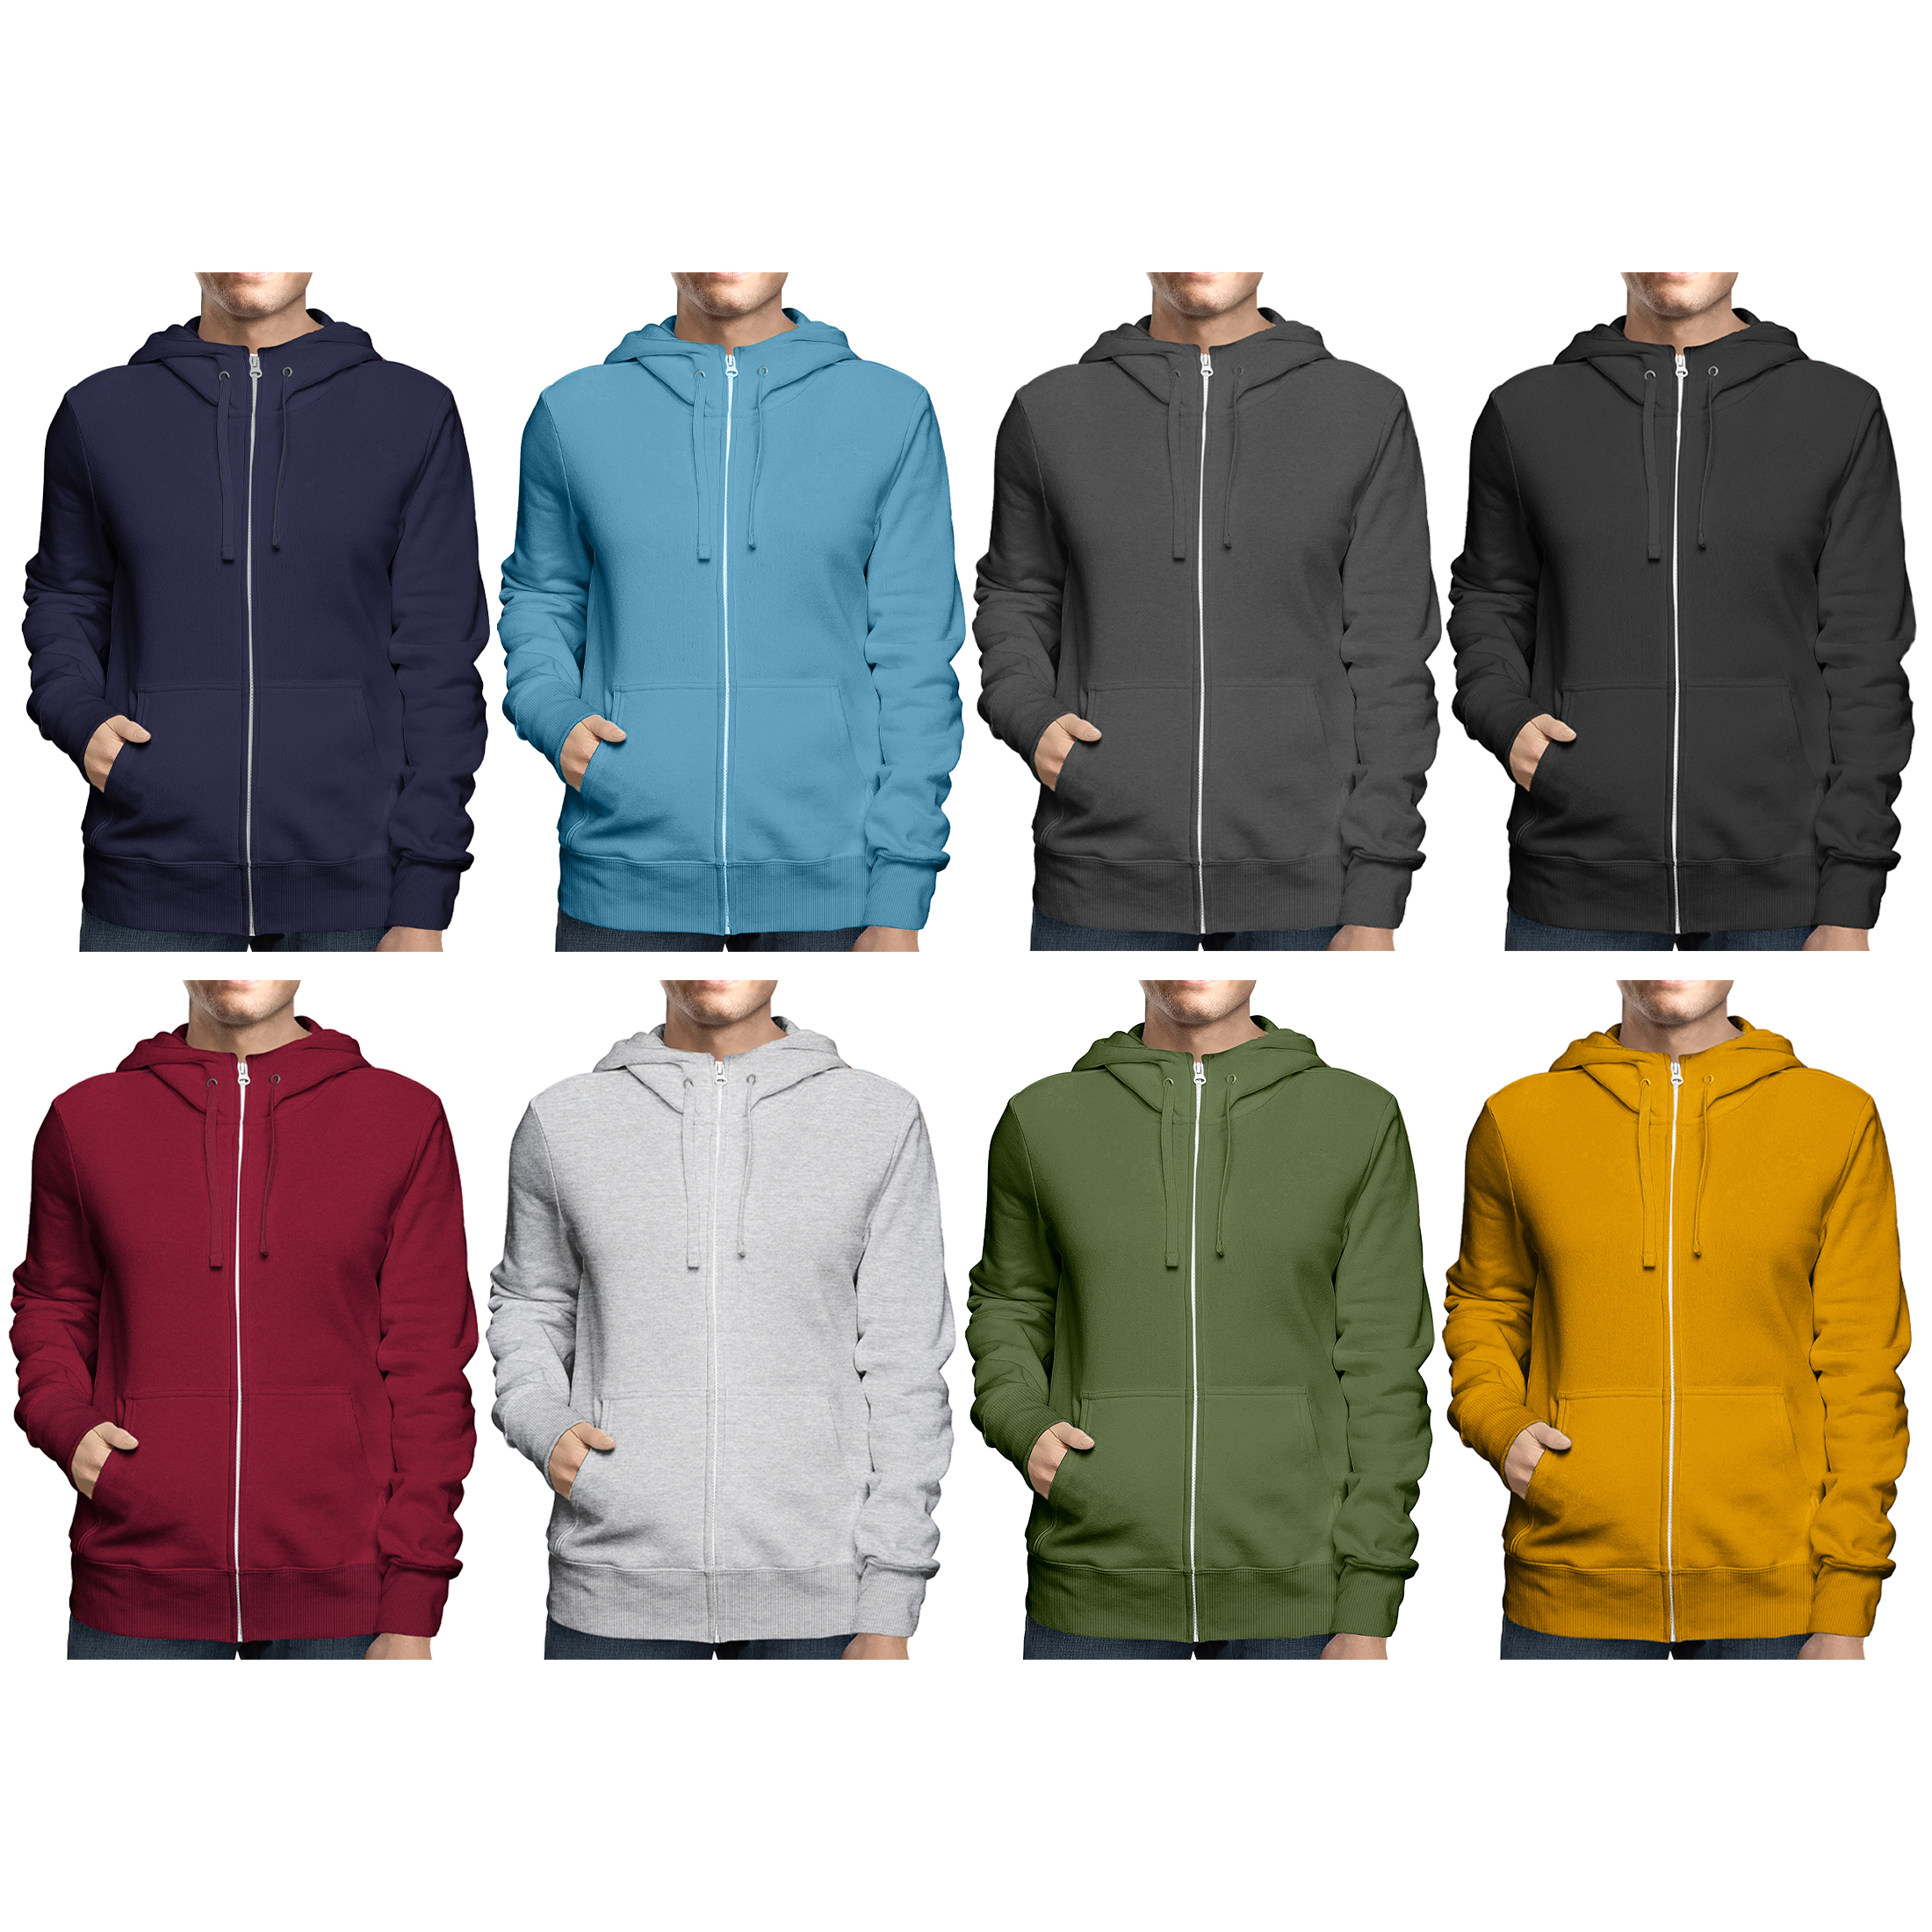 2-Pack: Men's Full Zip Up Fleece-Lined Hoodie Sweatshirt (Big & Tall Size Available) - Black & Burgundy, Large